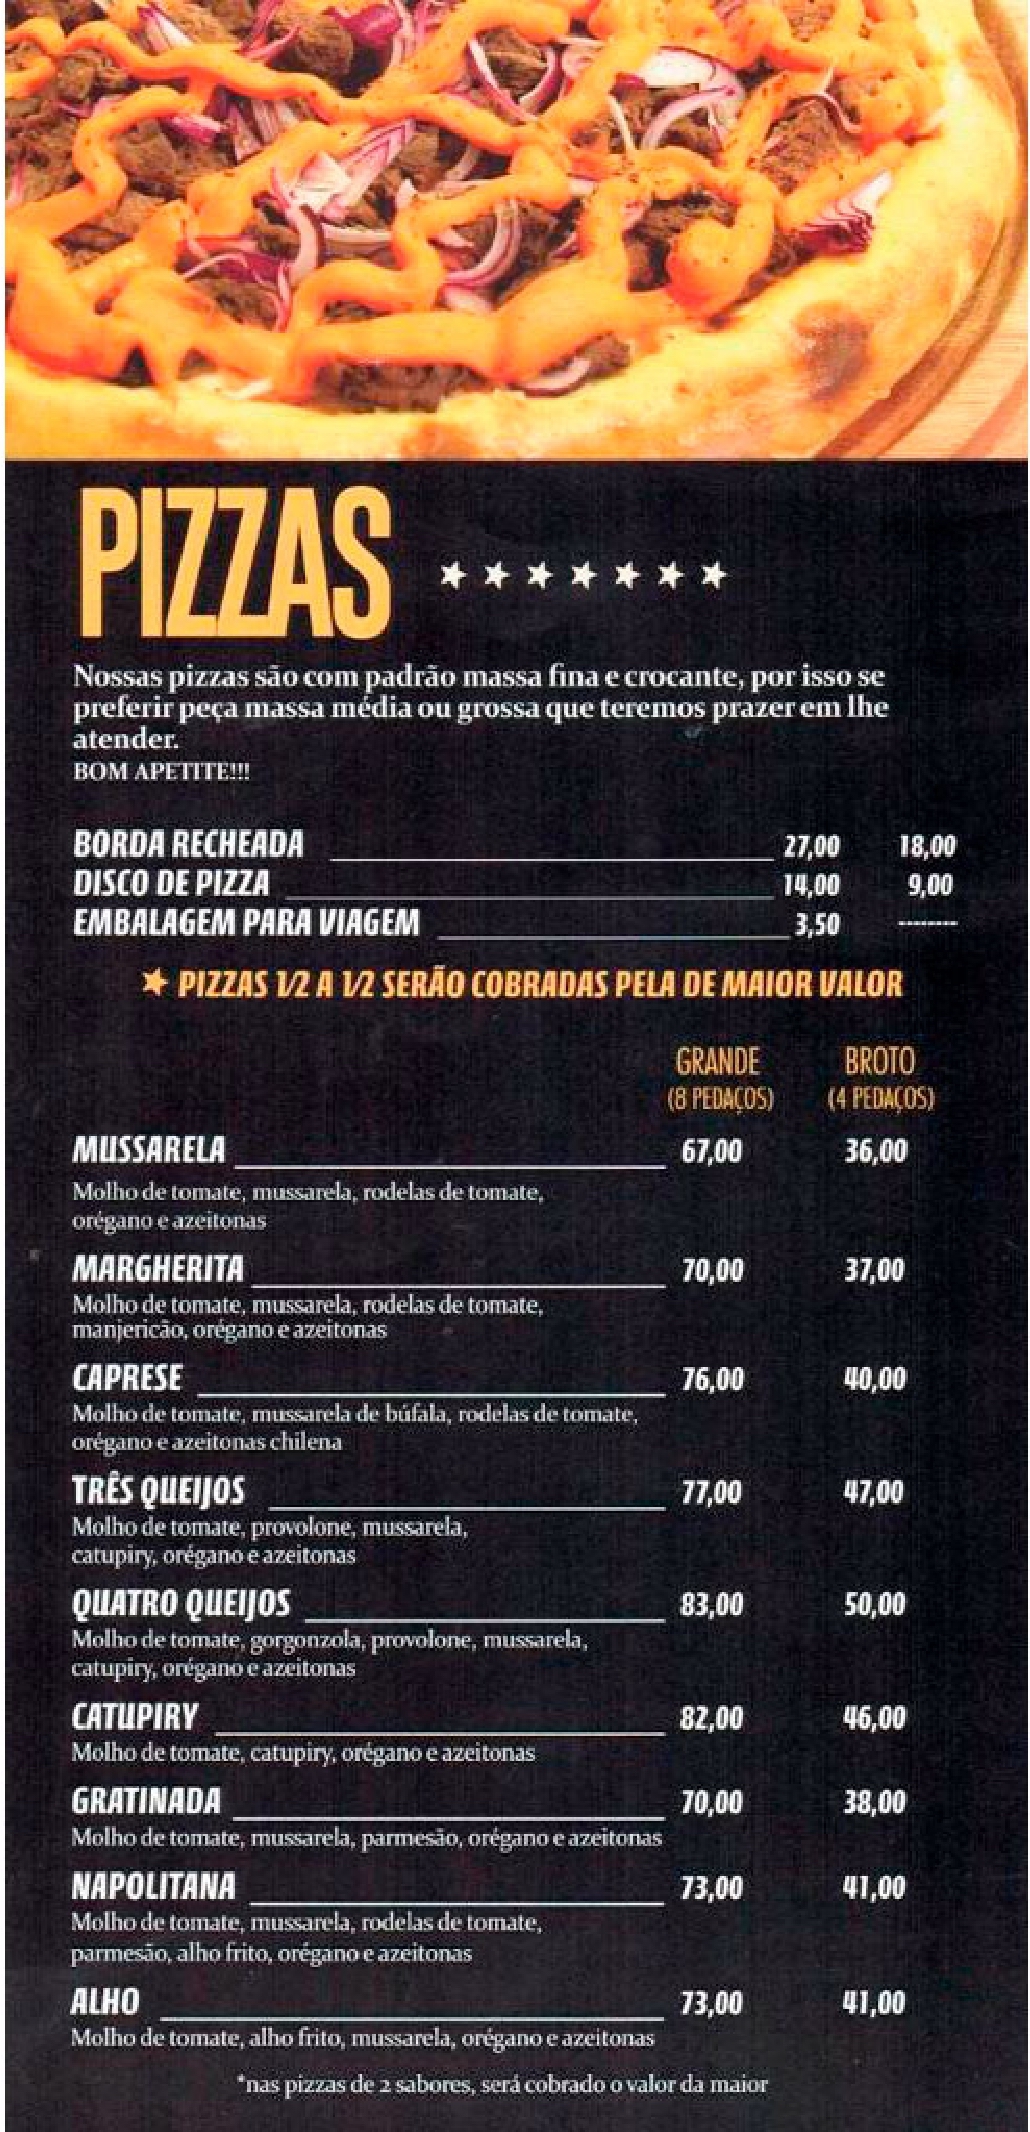 Pizza Place - Bertioga, SP